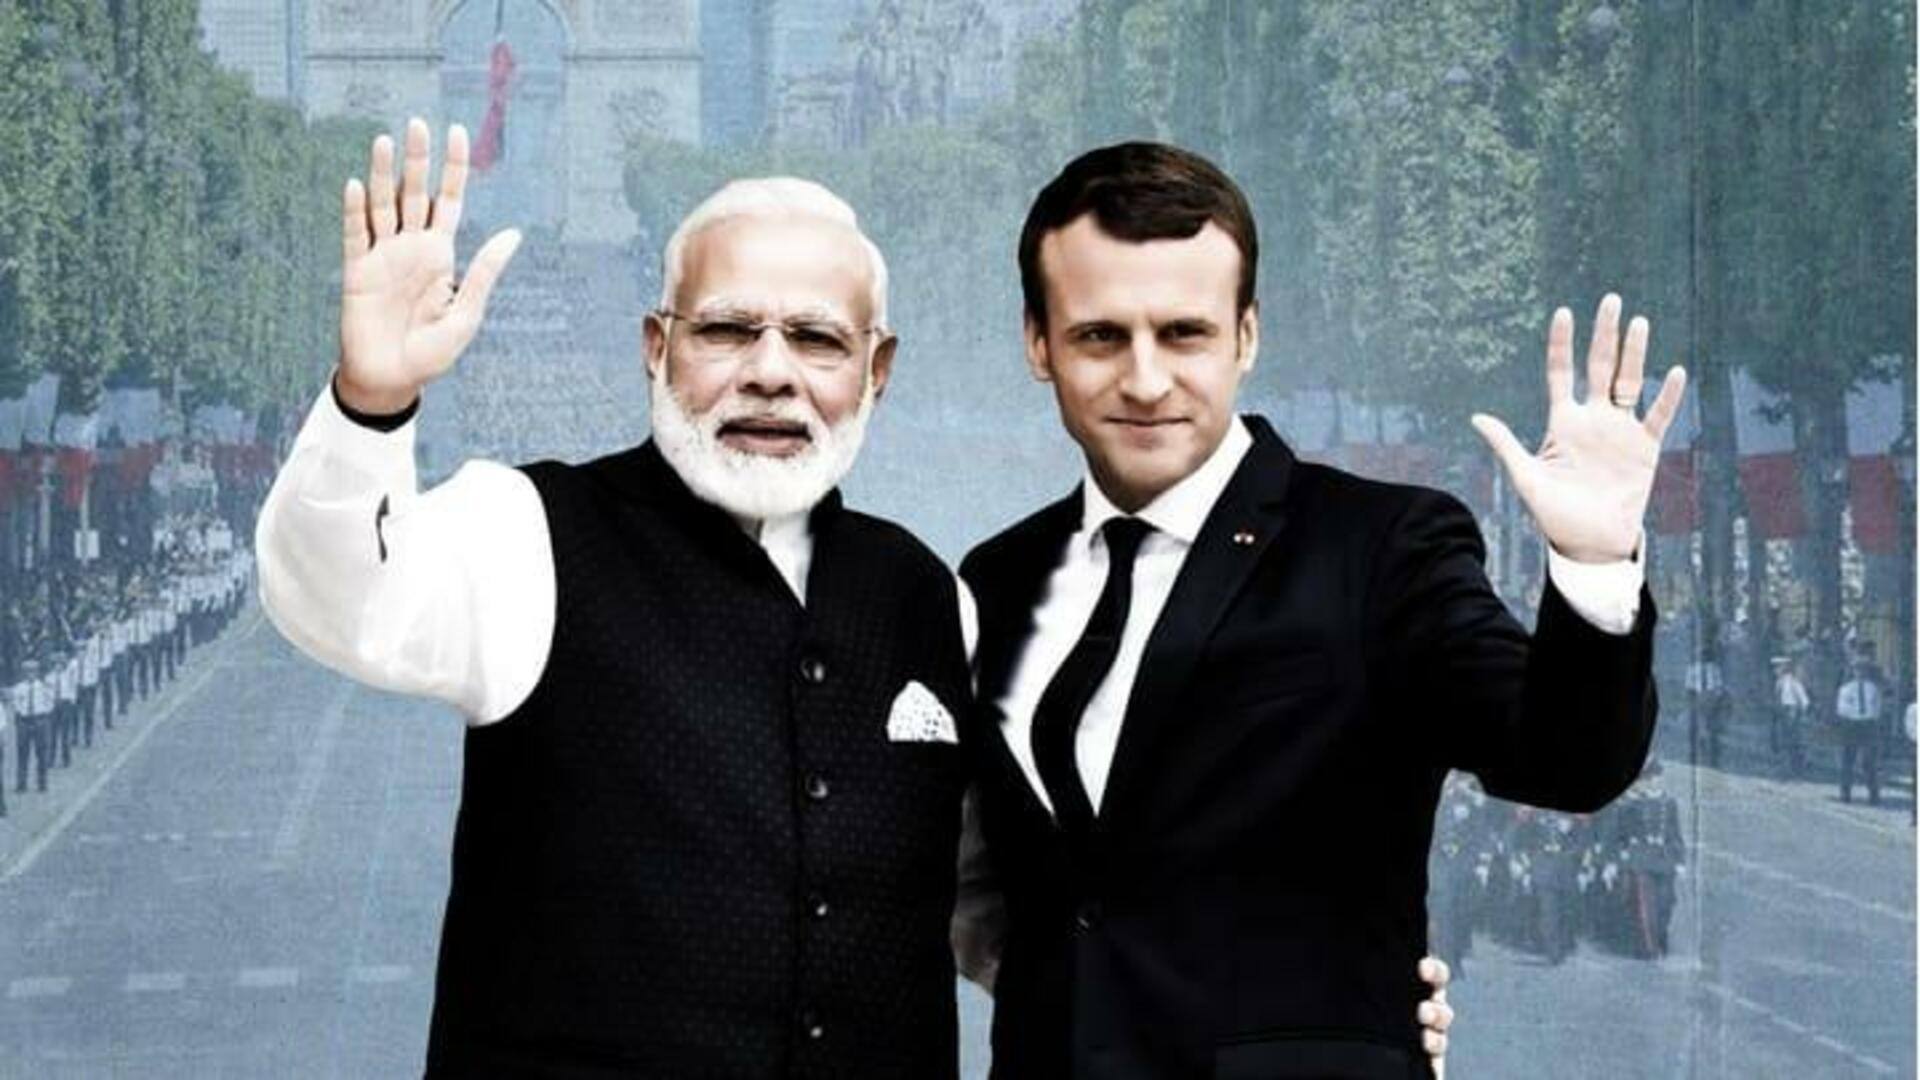 Modi France Tour: మేక్ ఇన్ ఇండియా, ఆత్మనిర్భర్ భారత్‌లో ఫ్రాన్స్ కీలక భాగస్వామి: ప్రధాని మోదీ